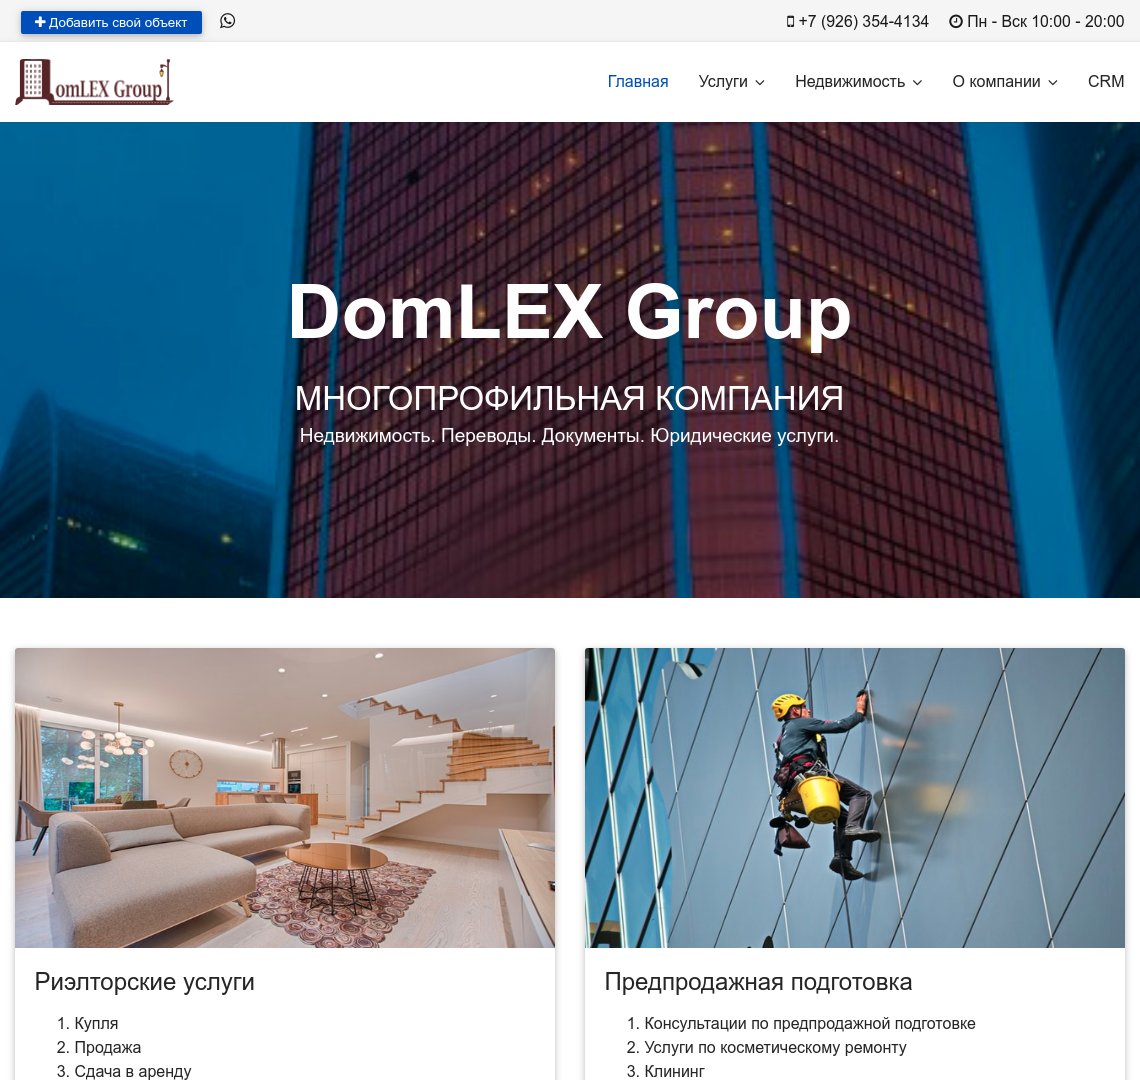 DomLEX Group